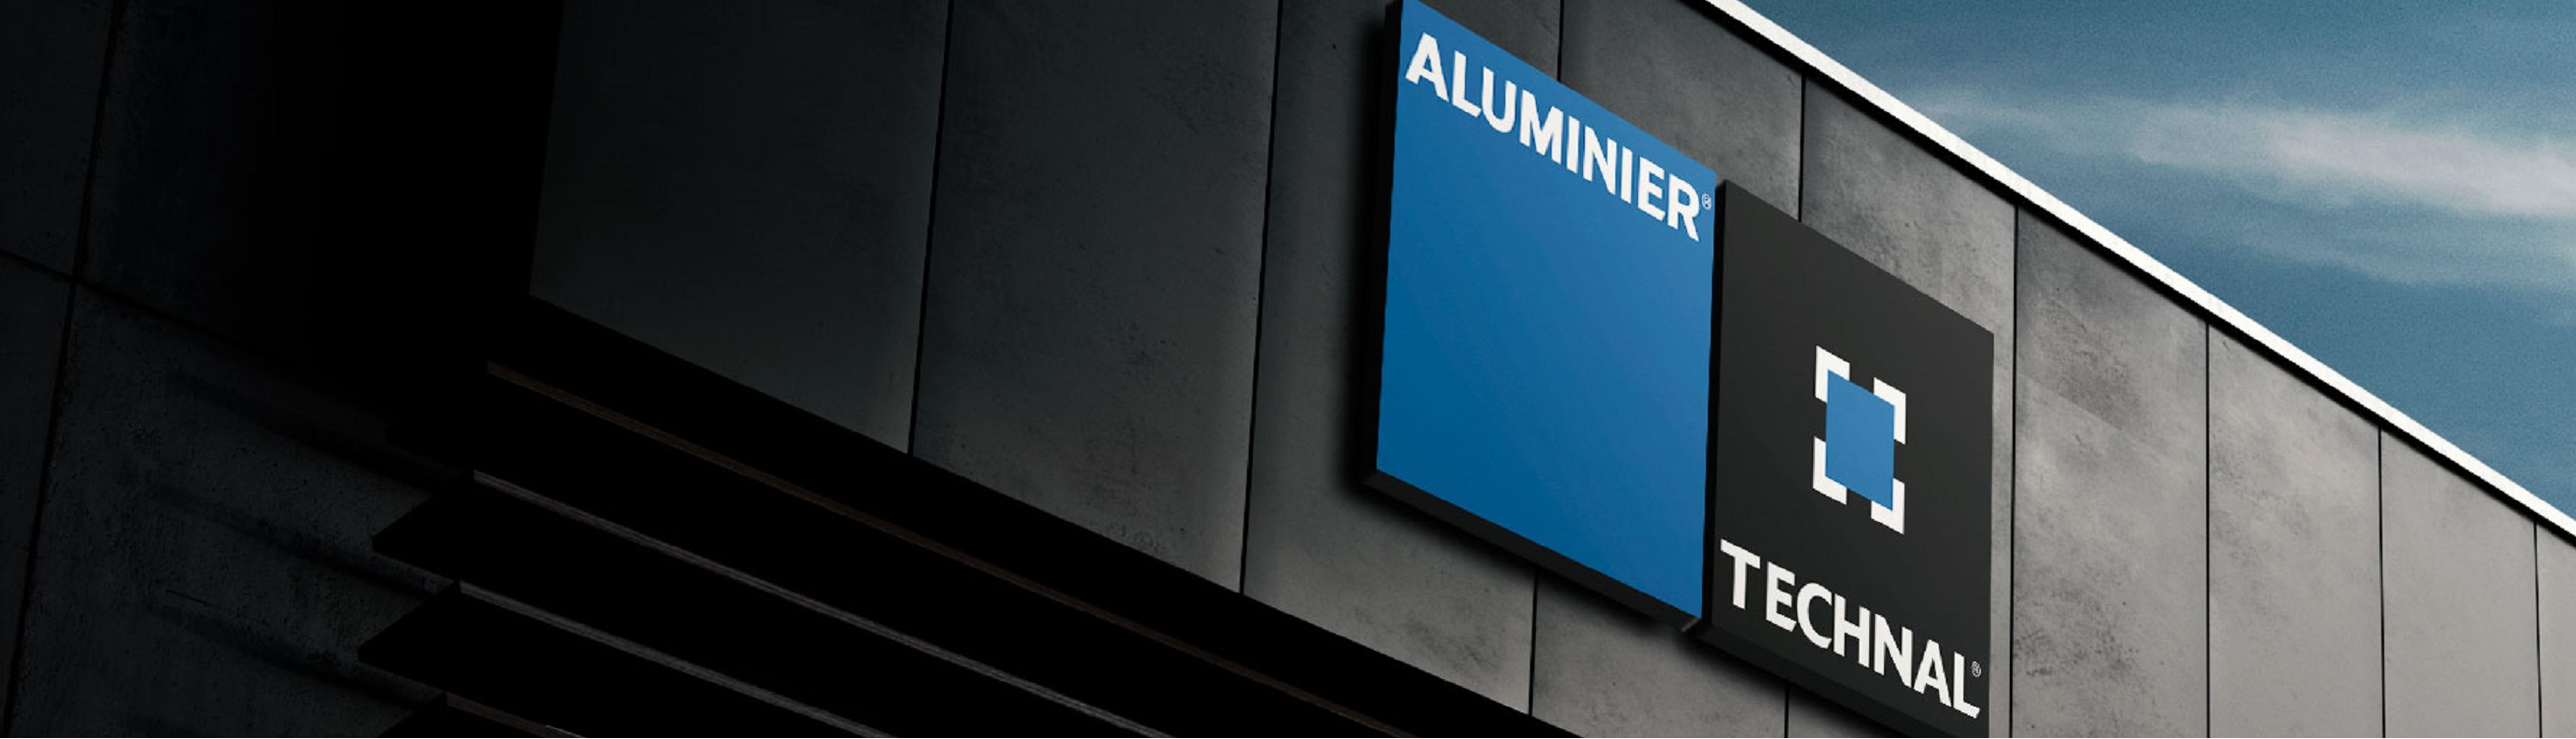 Aluminiers Technal